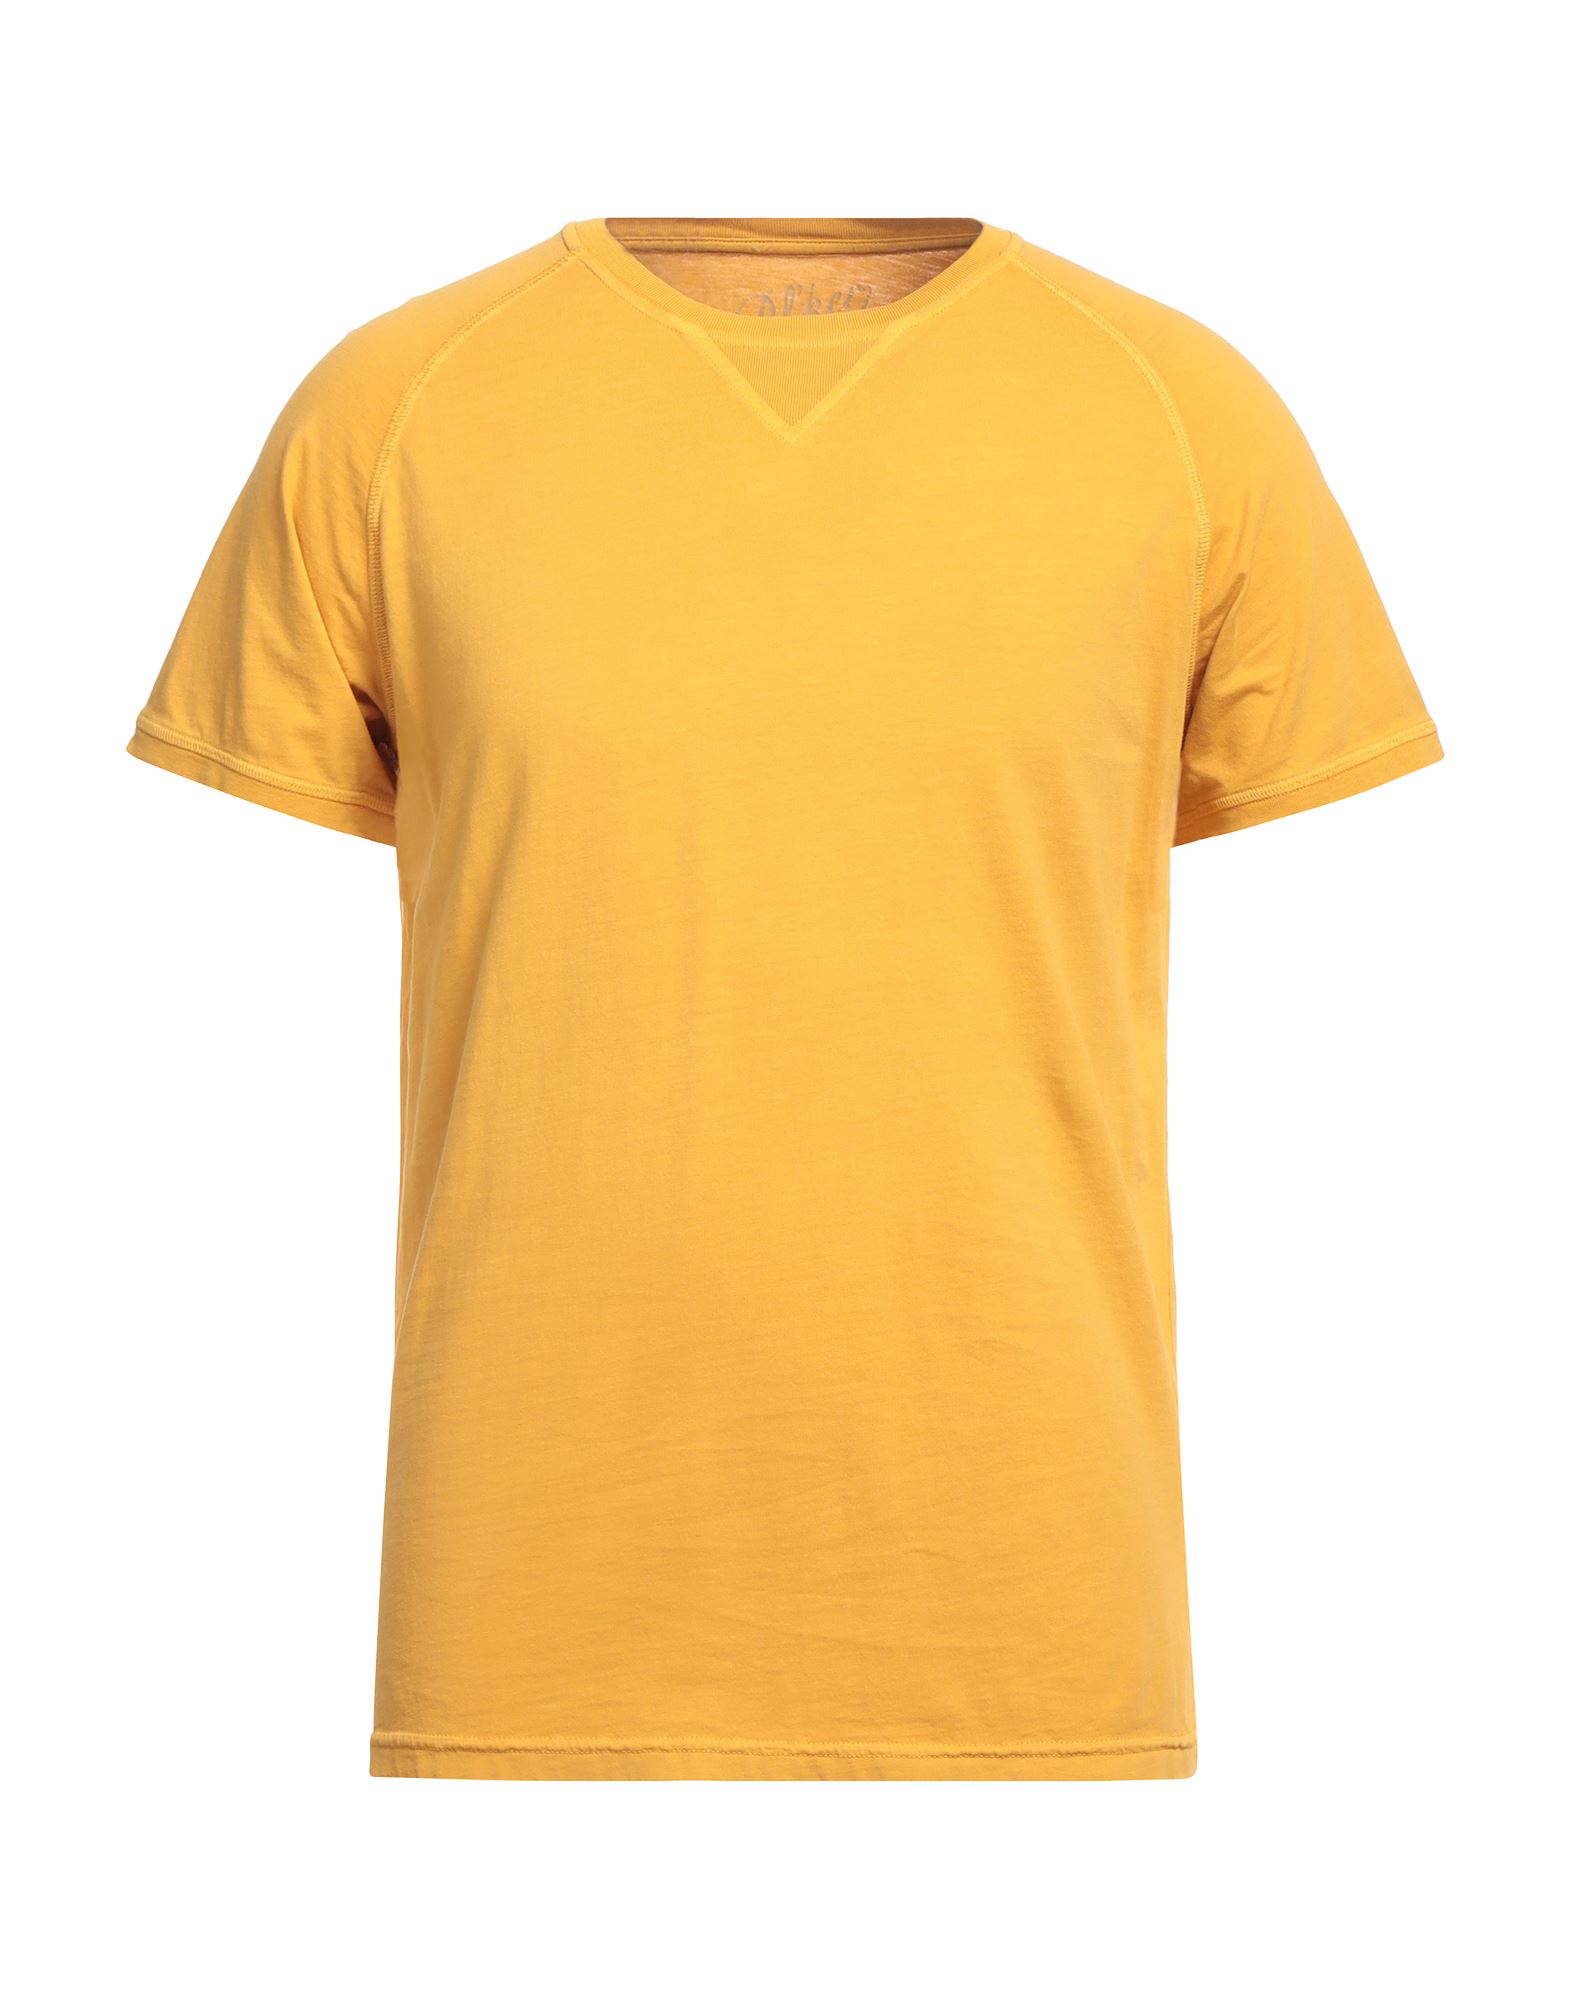 Bl'ker T-shirts In Yellow